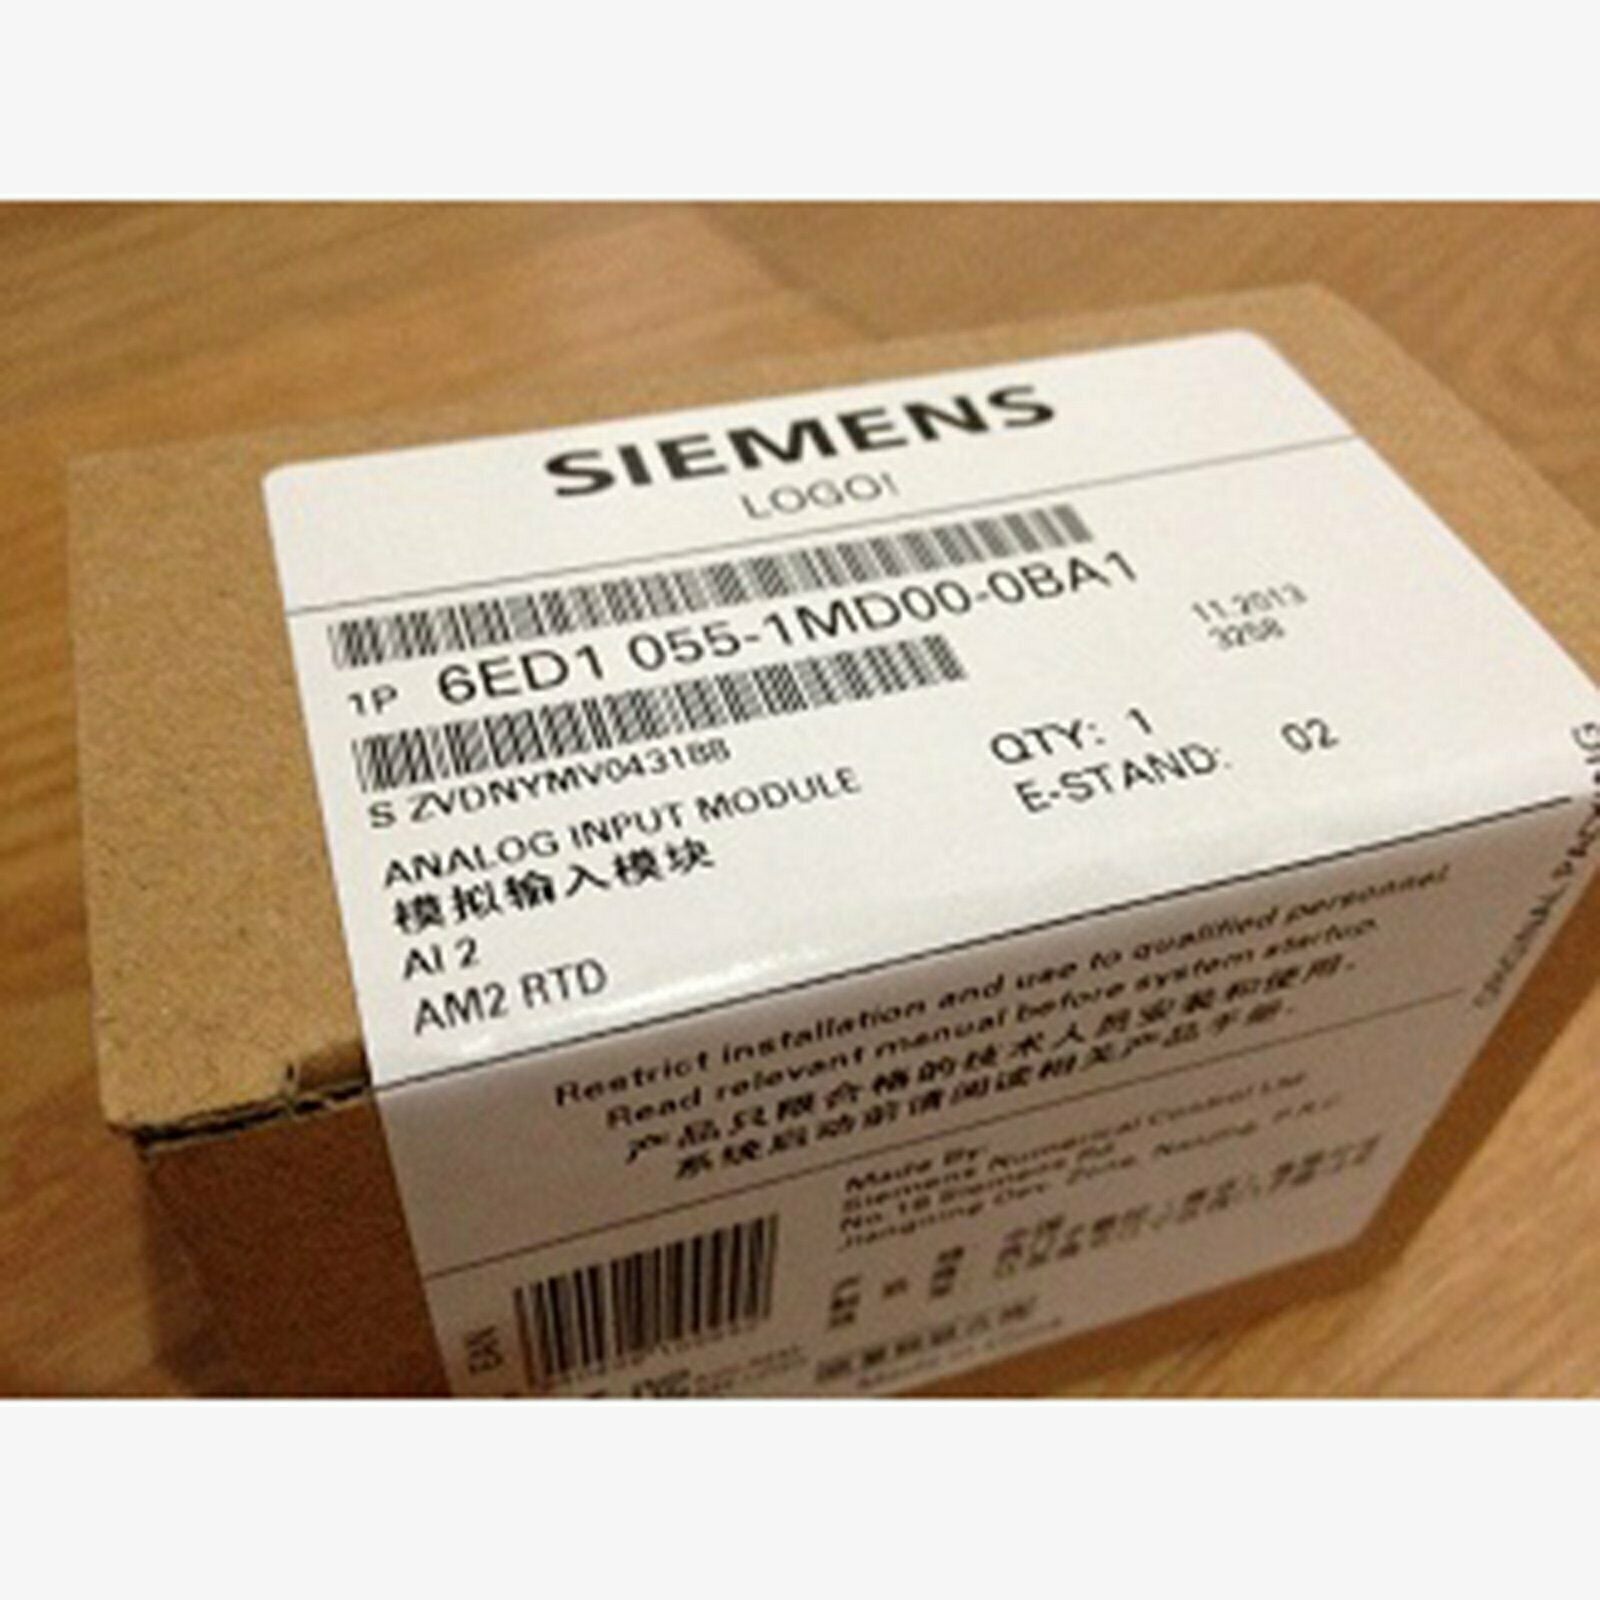 new 1PC  Siemens expansion module 6ED1055-1MD00-0BA1 6ED1 055-1MD00-0BA1